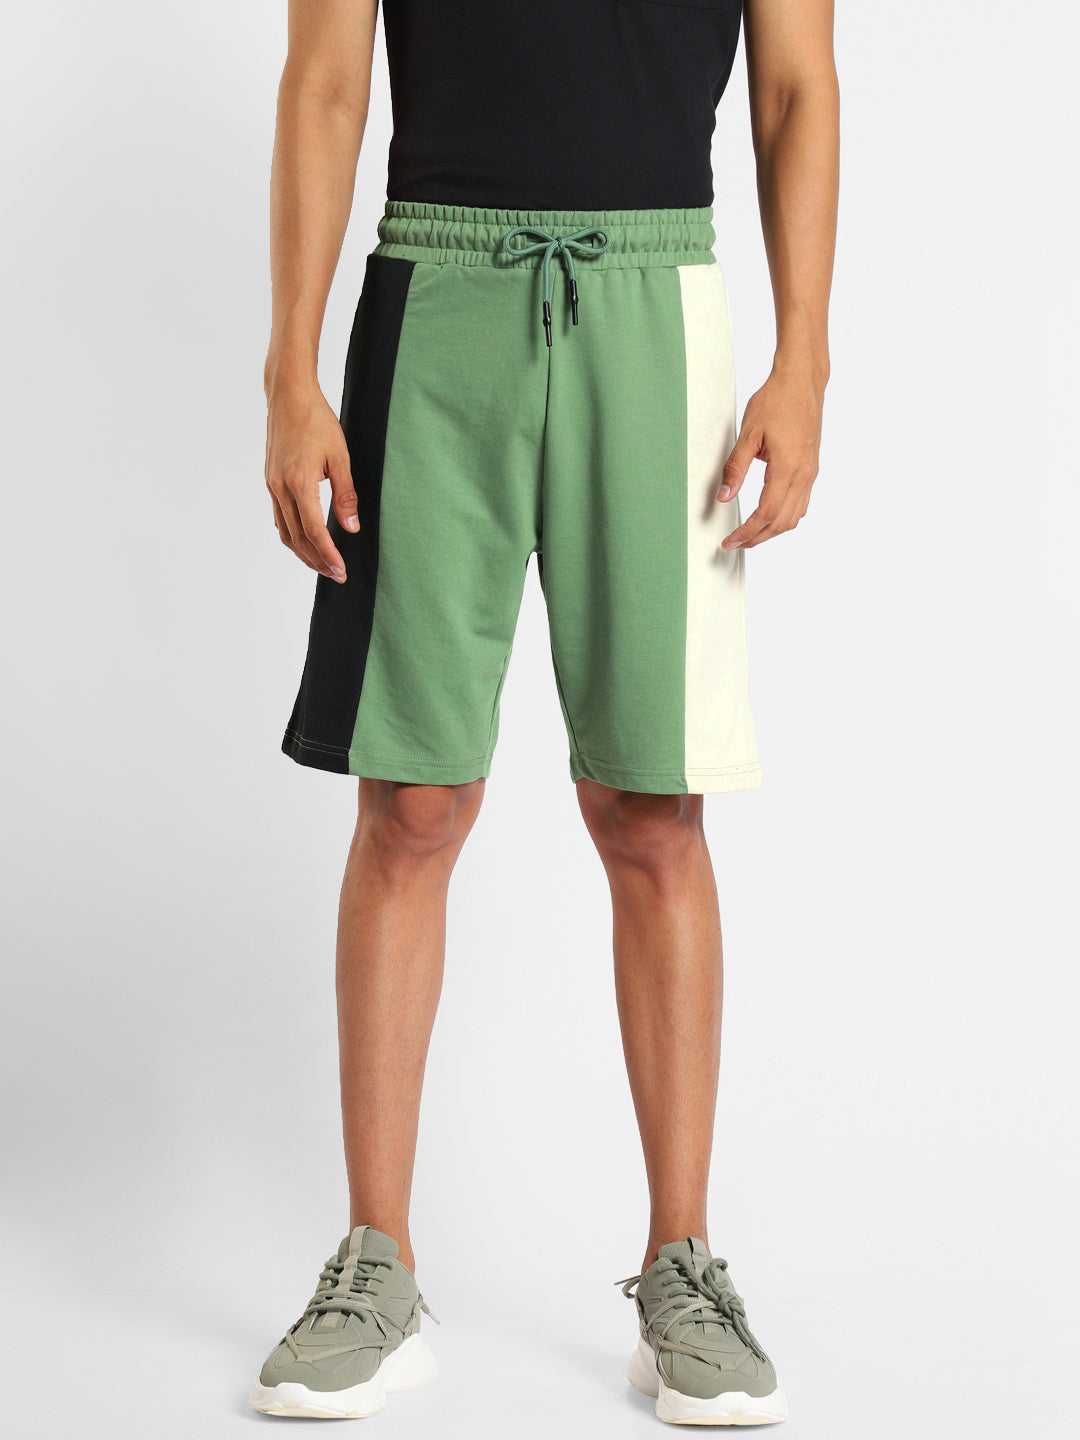 Green Colorblocked Shorts